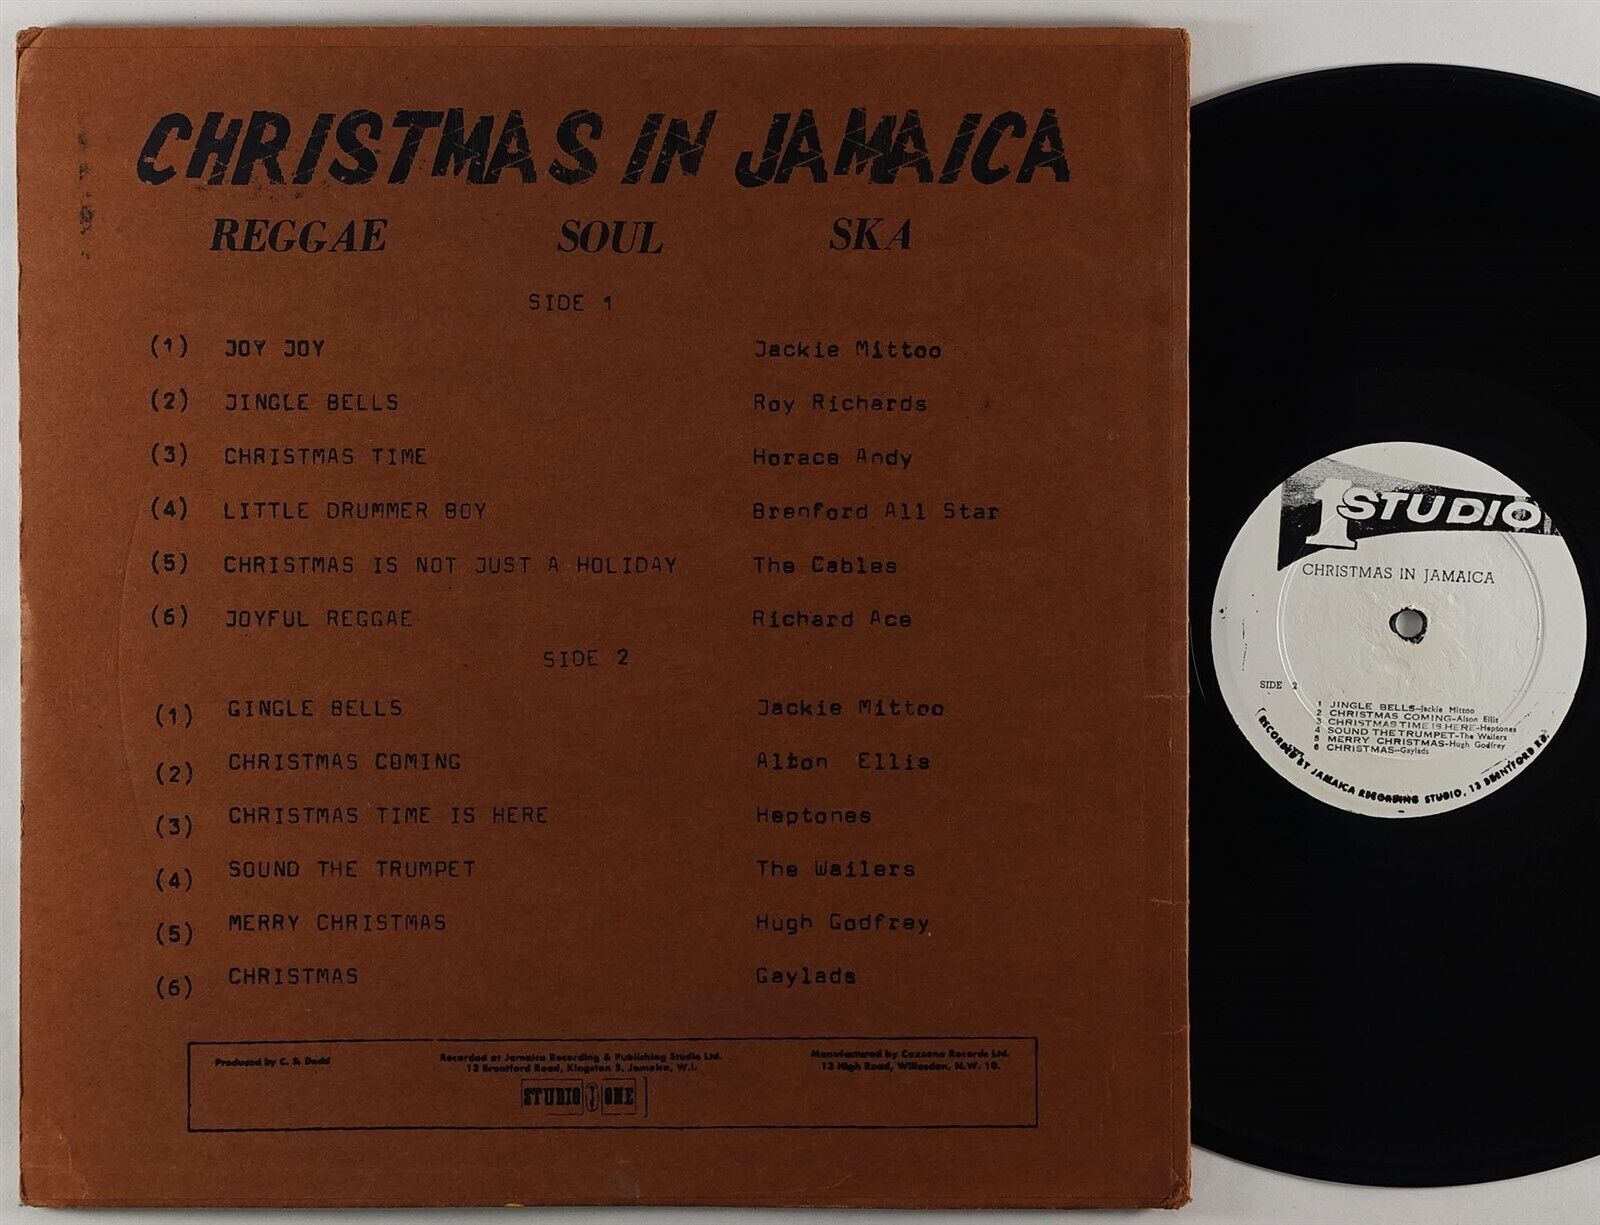 Pic 1 V/A "Christmas In Jamaica" Reggae LP Studio One Silkscreened Cover